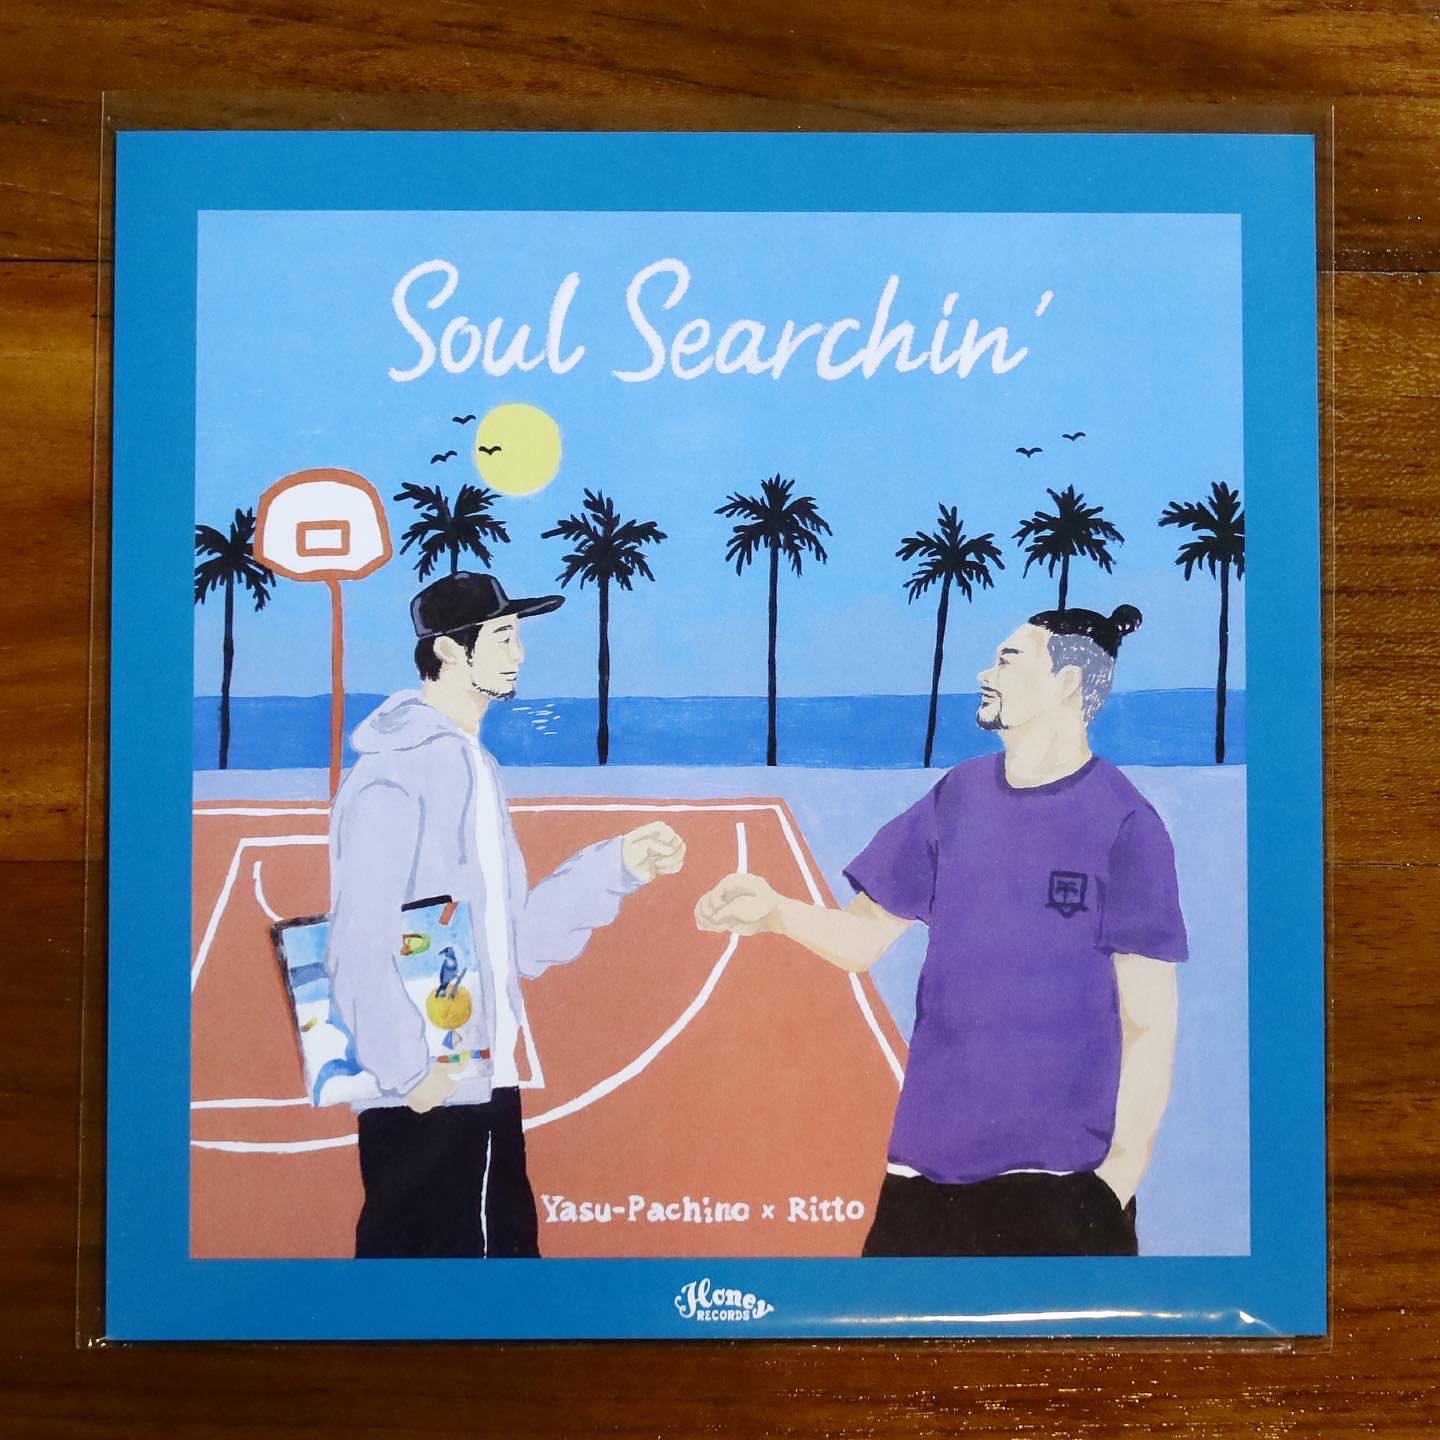 Yasu-Pacino x Ritto 7inch 『Soul Searchin'』発売